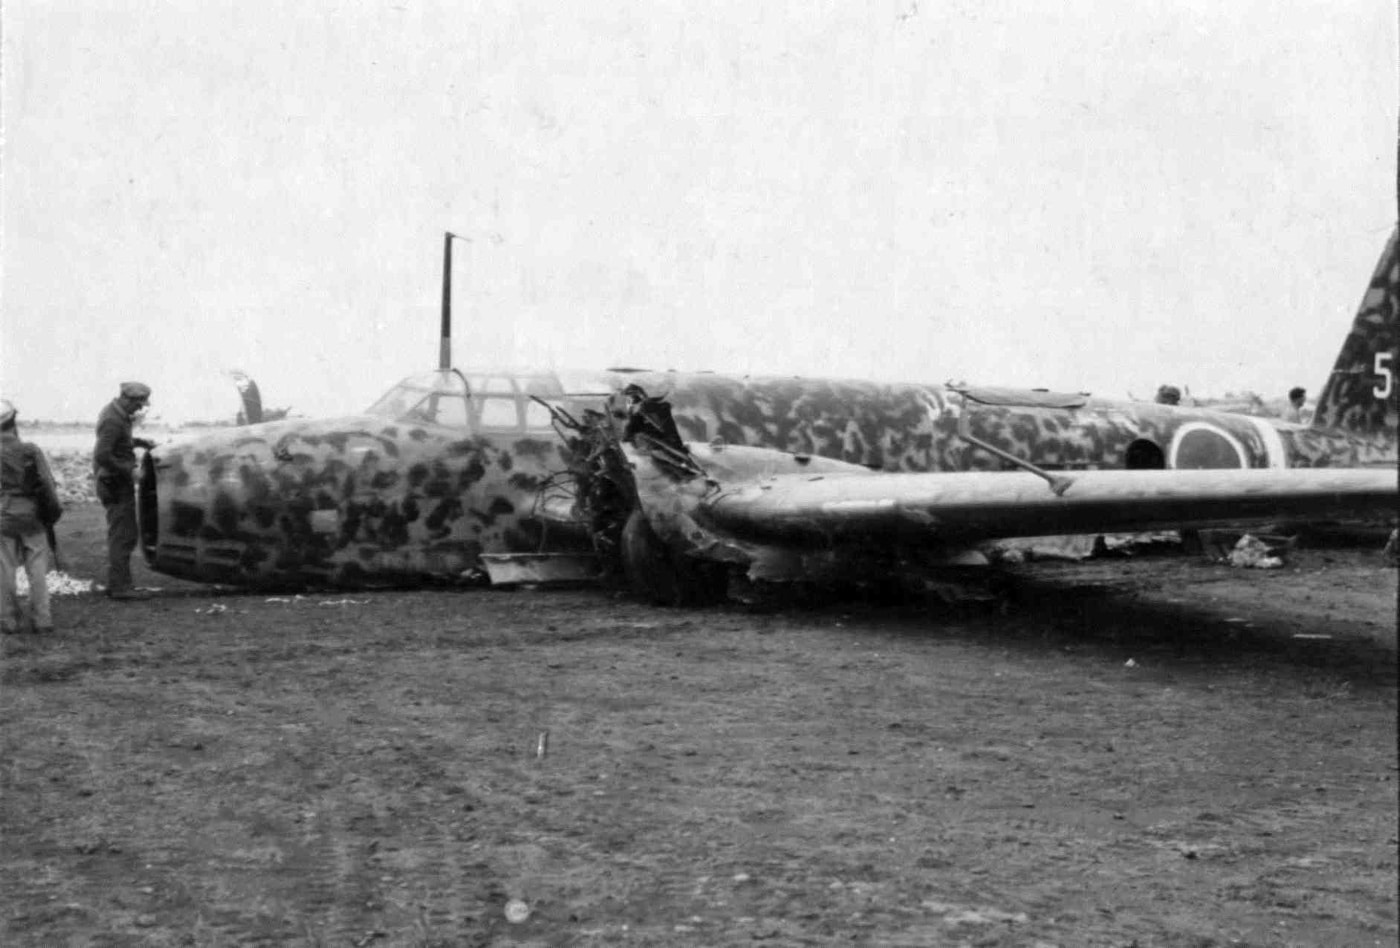 ki-21 bomber transformed to a transport